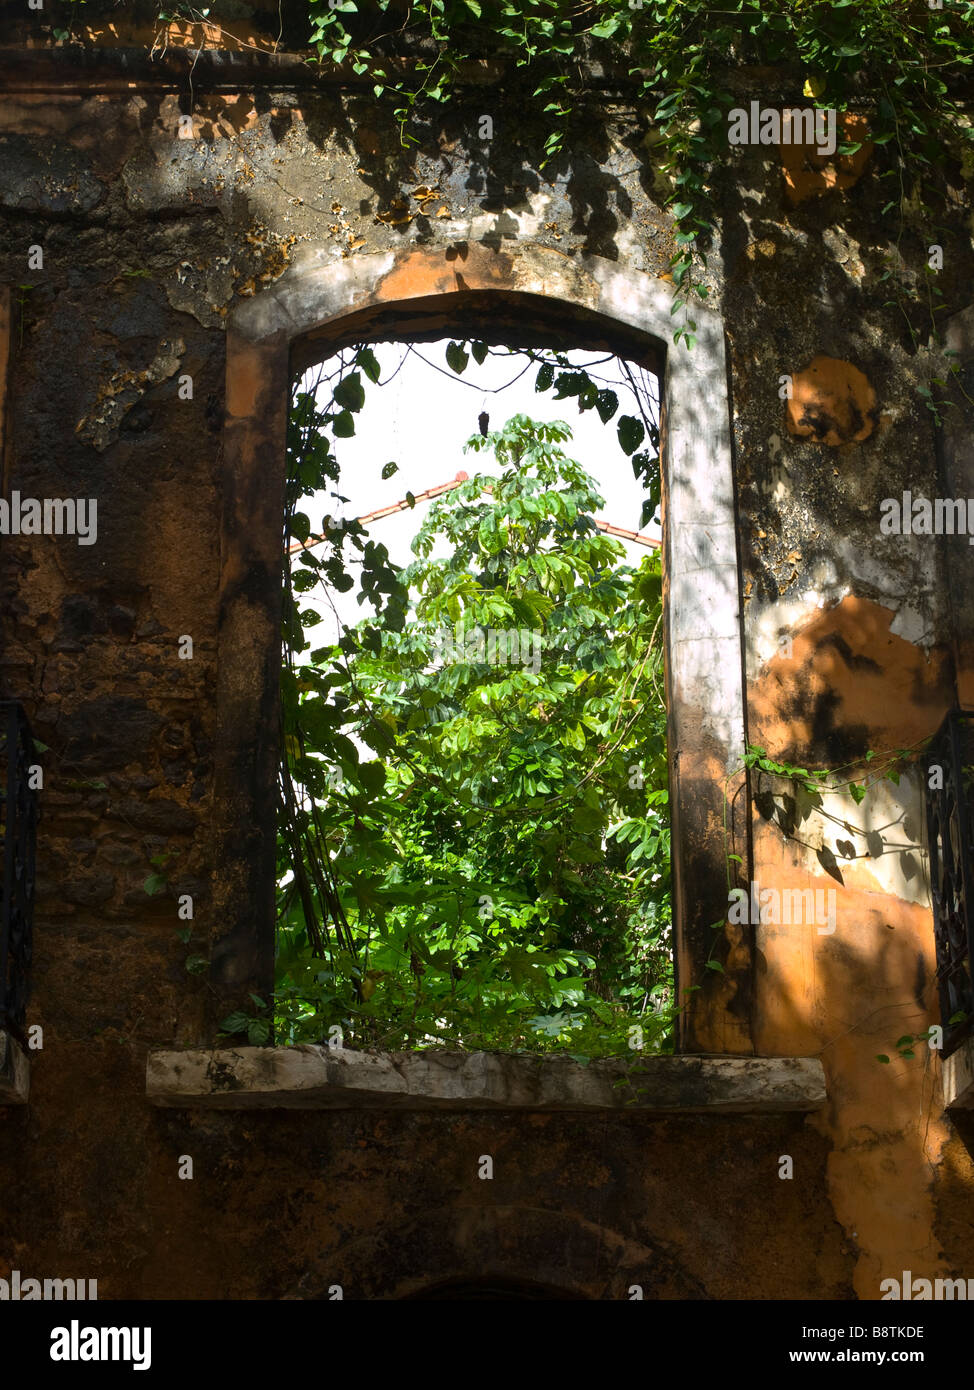 Vegetating invading the window of an abandoned house in São Luis, Maranhão State, Brazil. Stock Photo